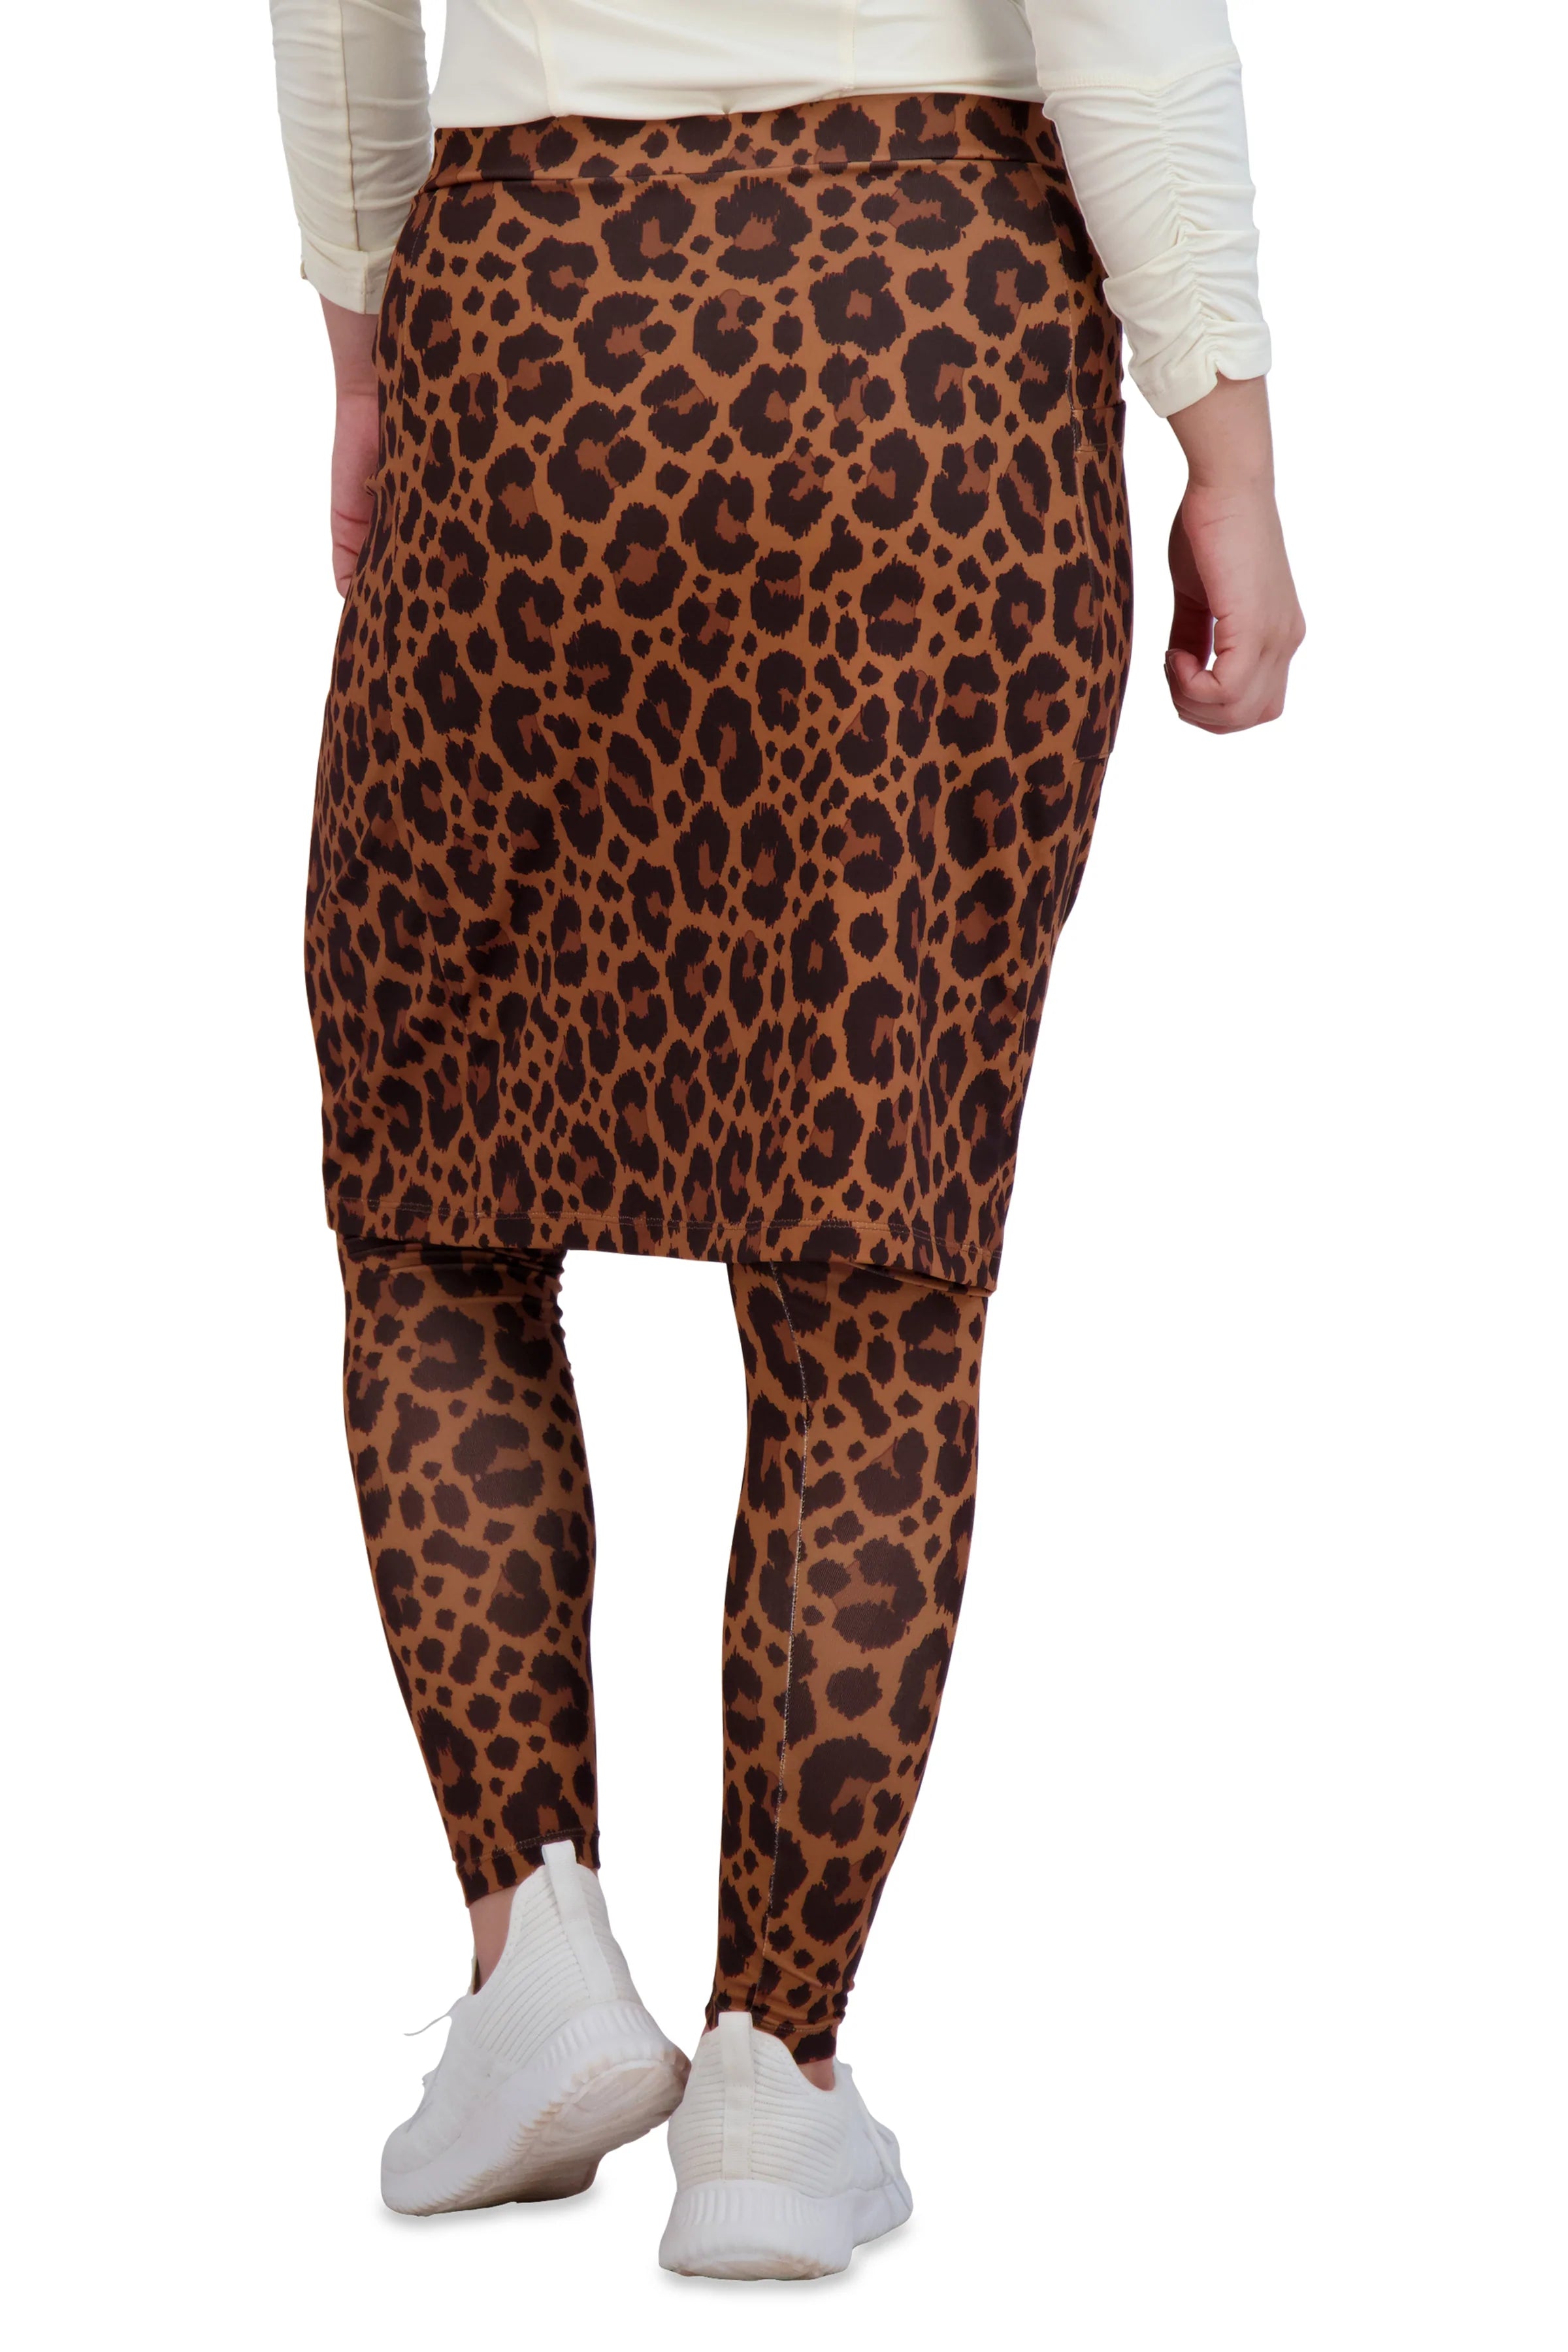 Snoga Fit Long Leggings- Leopard